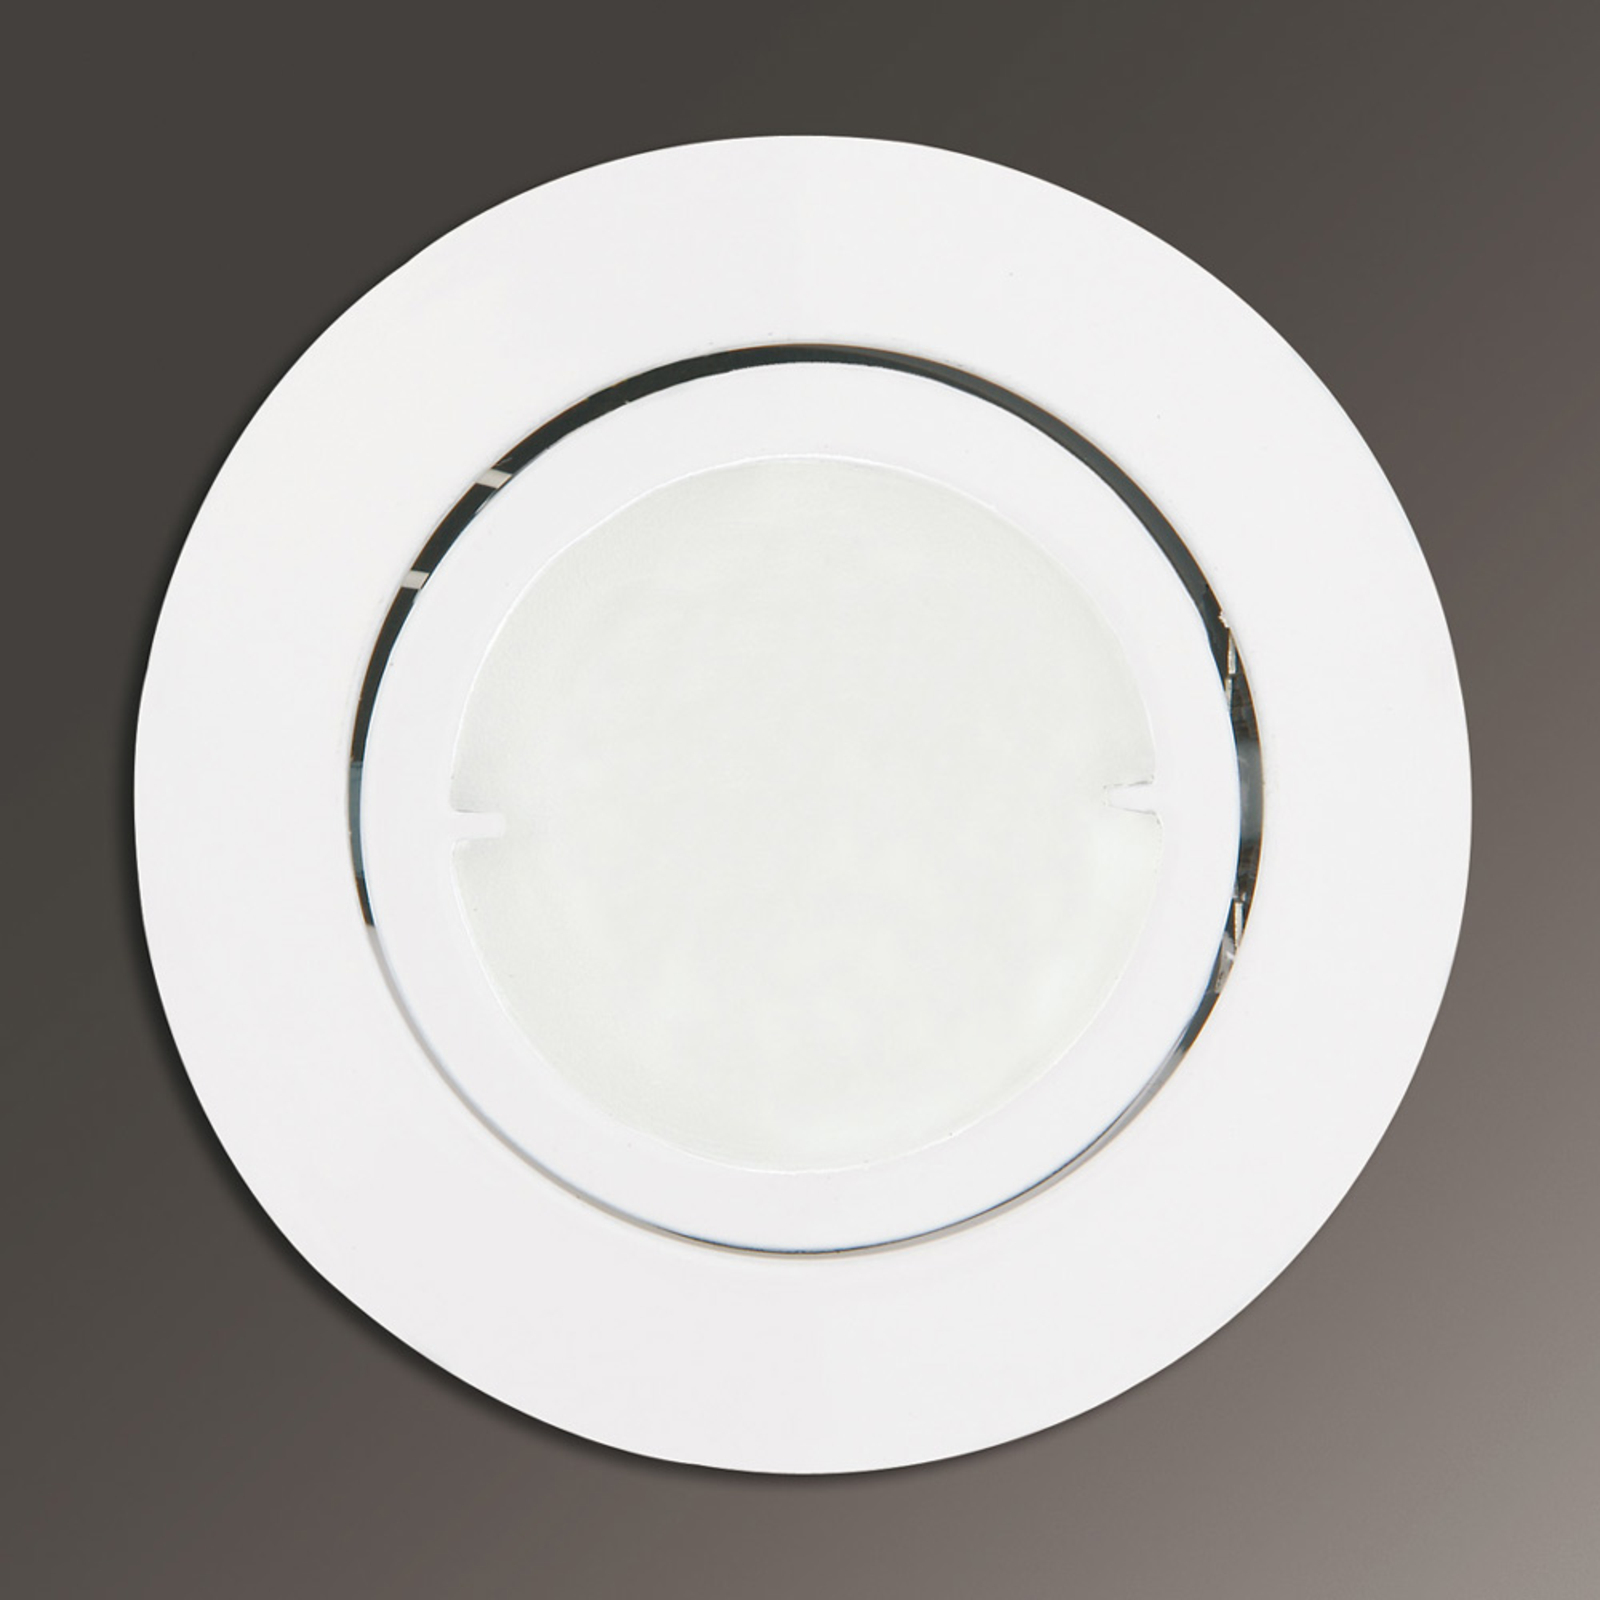 Joanie - LED-inbyggnadslampa i vitt, rund